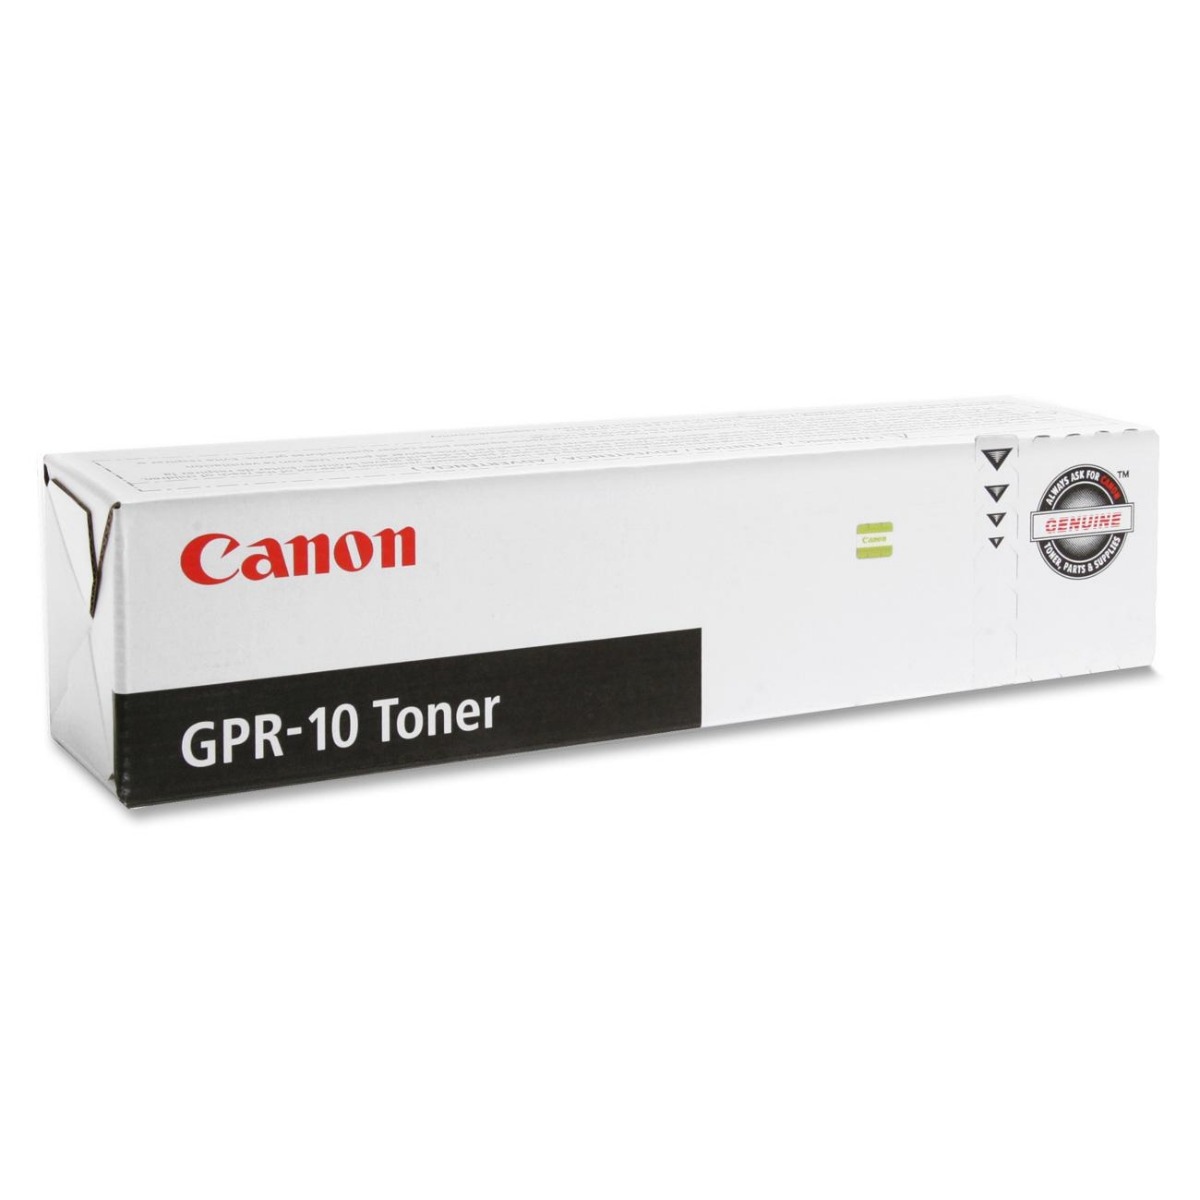 toner canon gpr 10 - 1310-1210